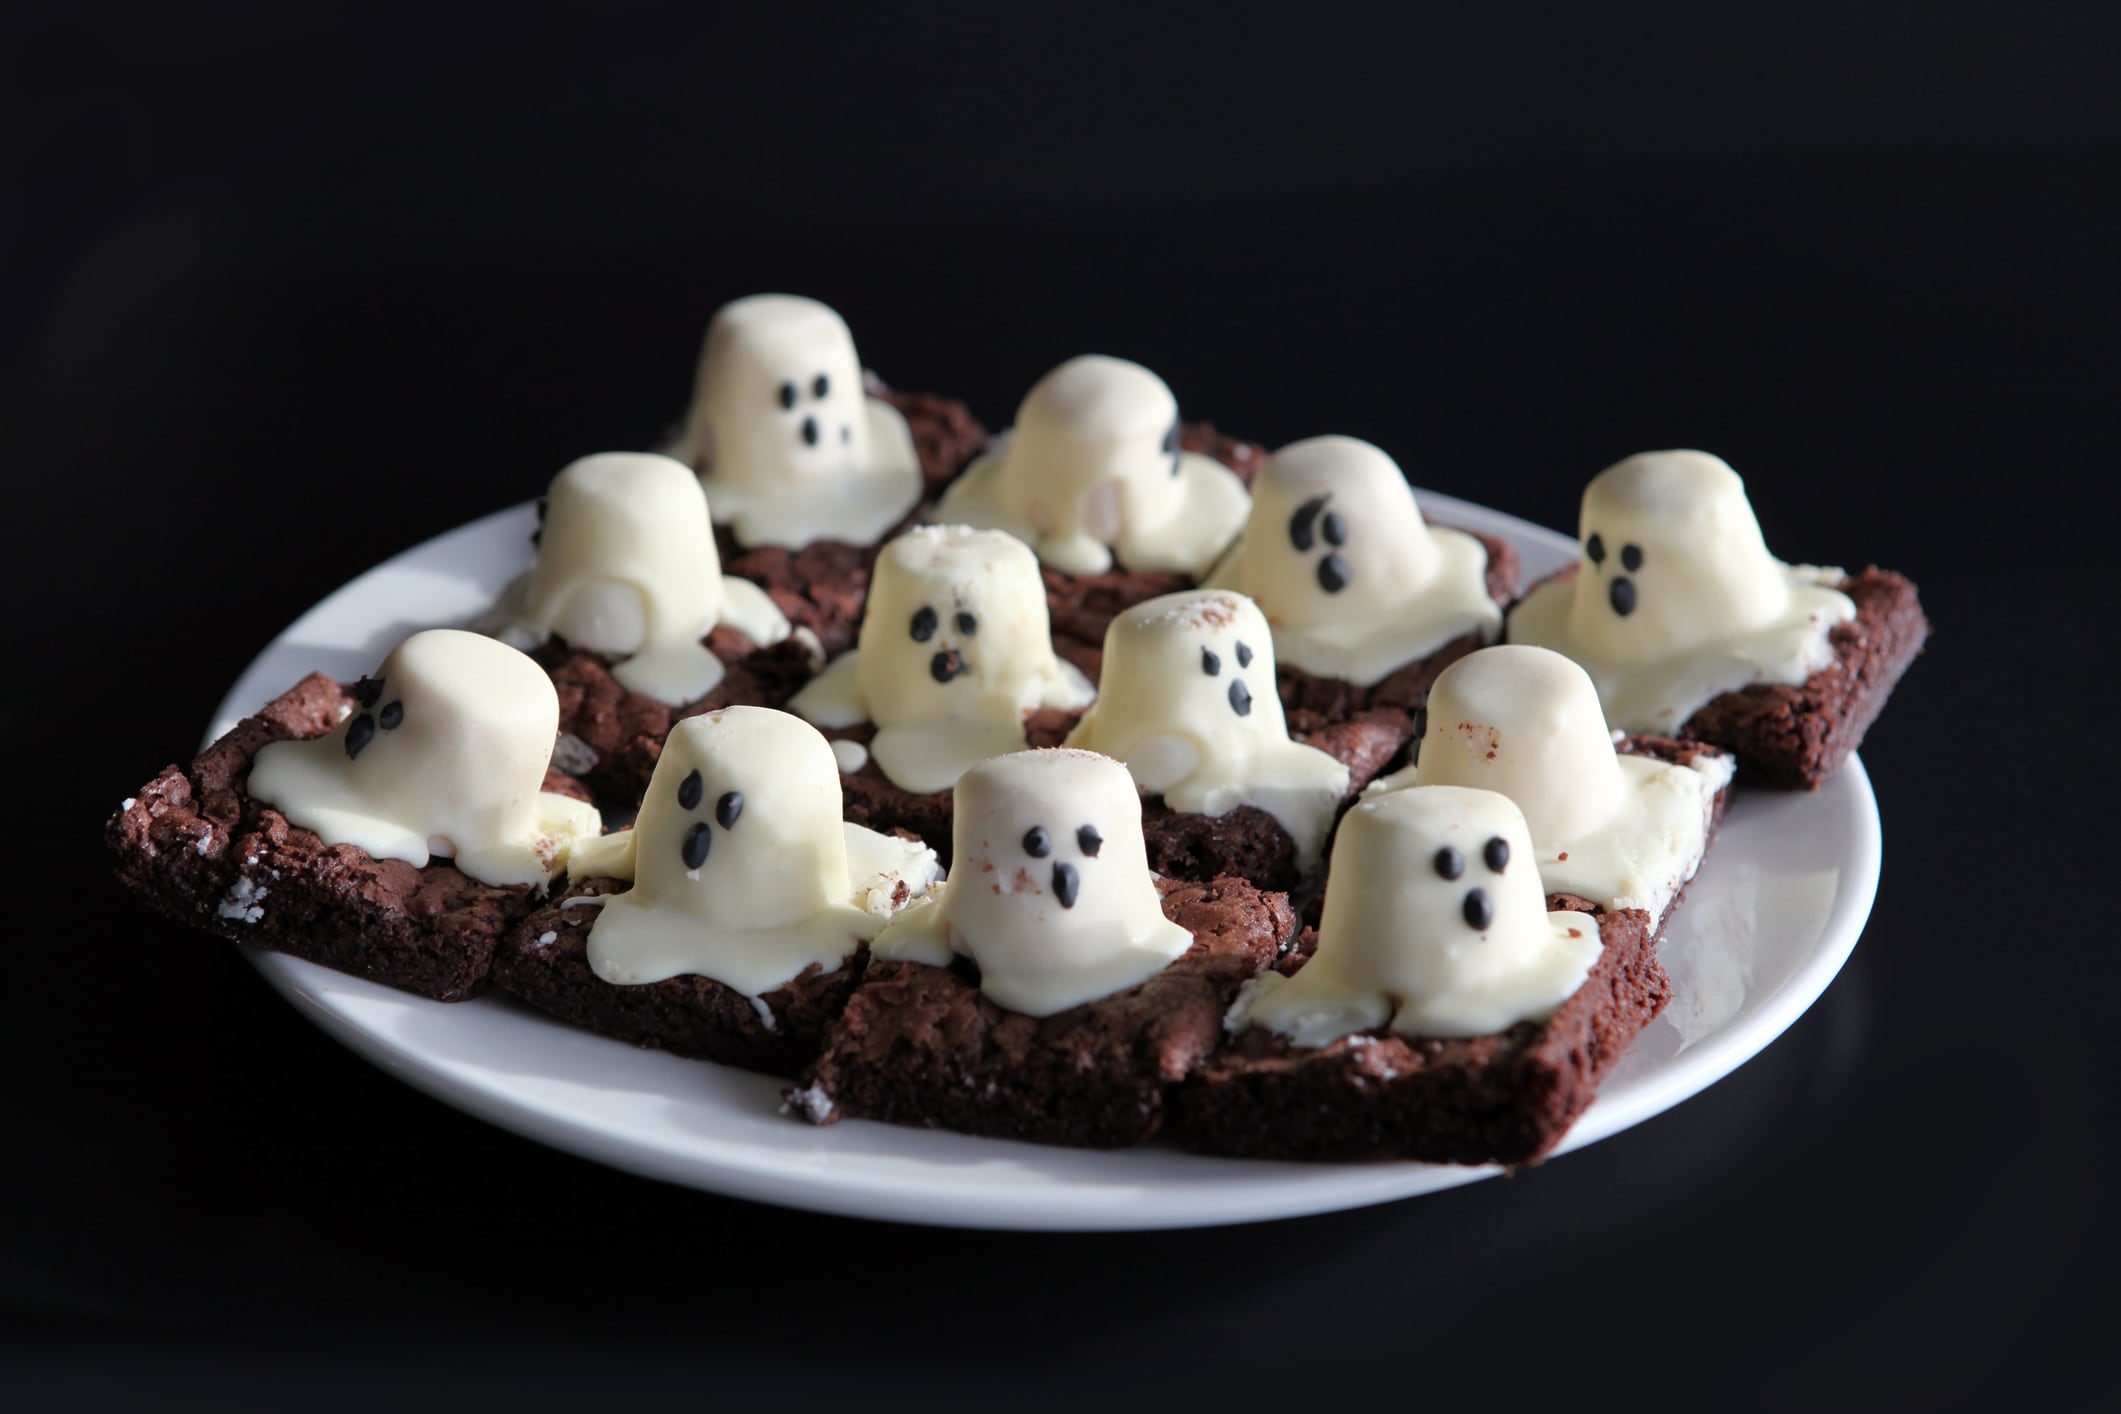 Ghost brownies for Halloween